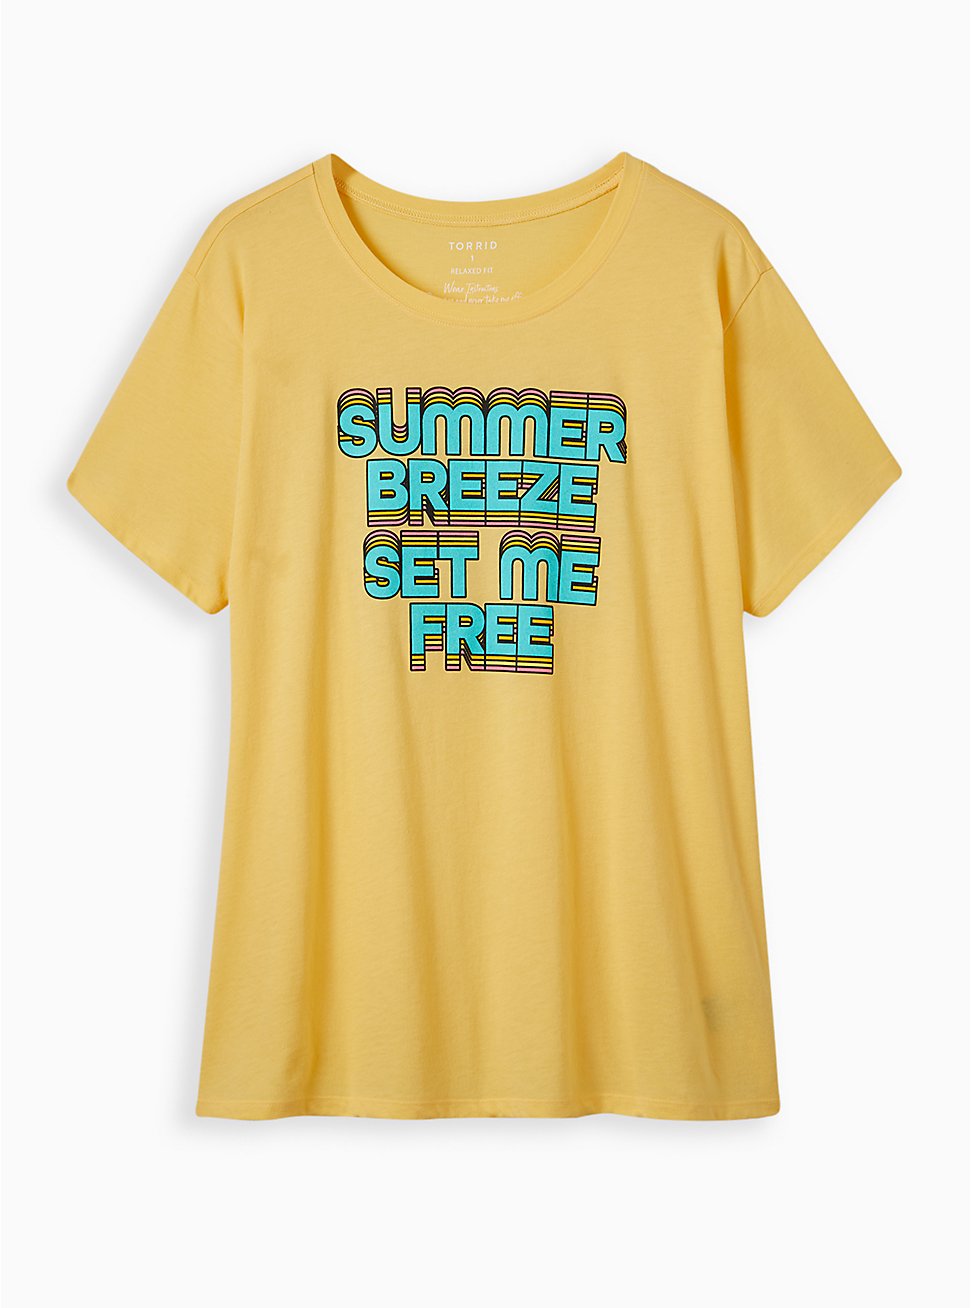 Relaxed Tee - Signature Jersey Summer Yellow, SUNDRESS, hi-res